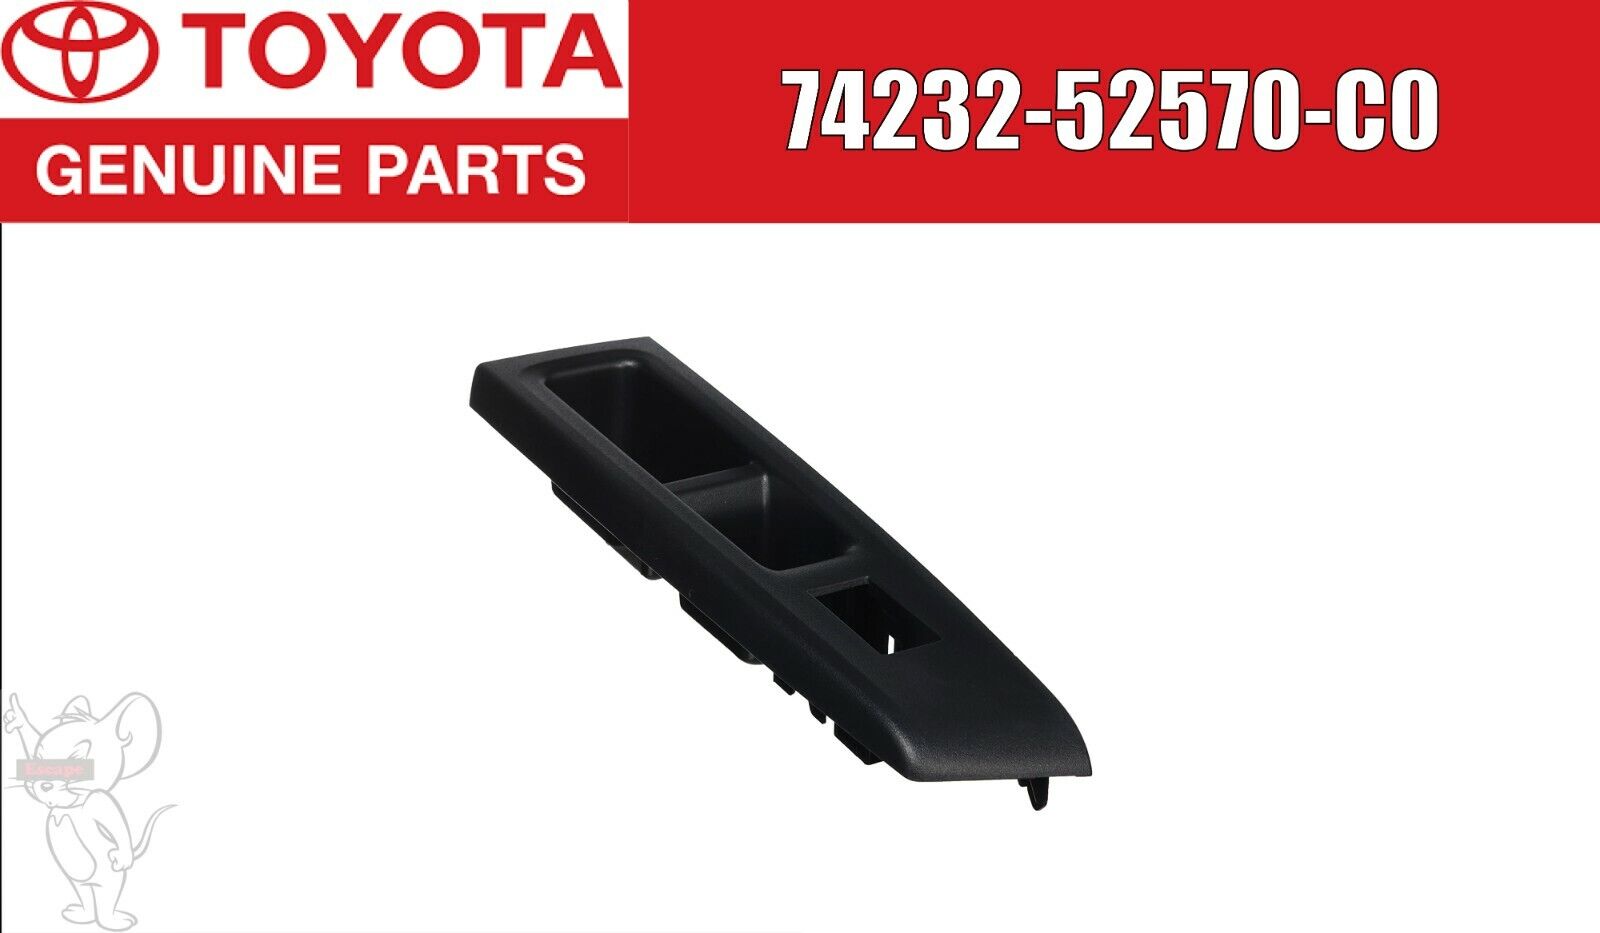 Toyota Genuine Vitz 2010-2014 Front Armrest Upper Panel LH 74232-52570-C0 OEM 